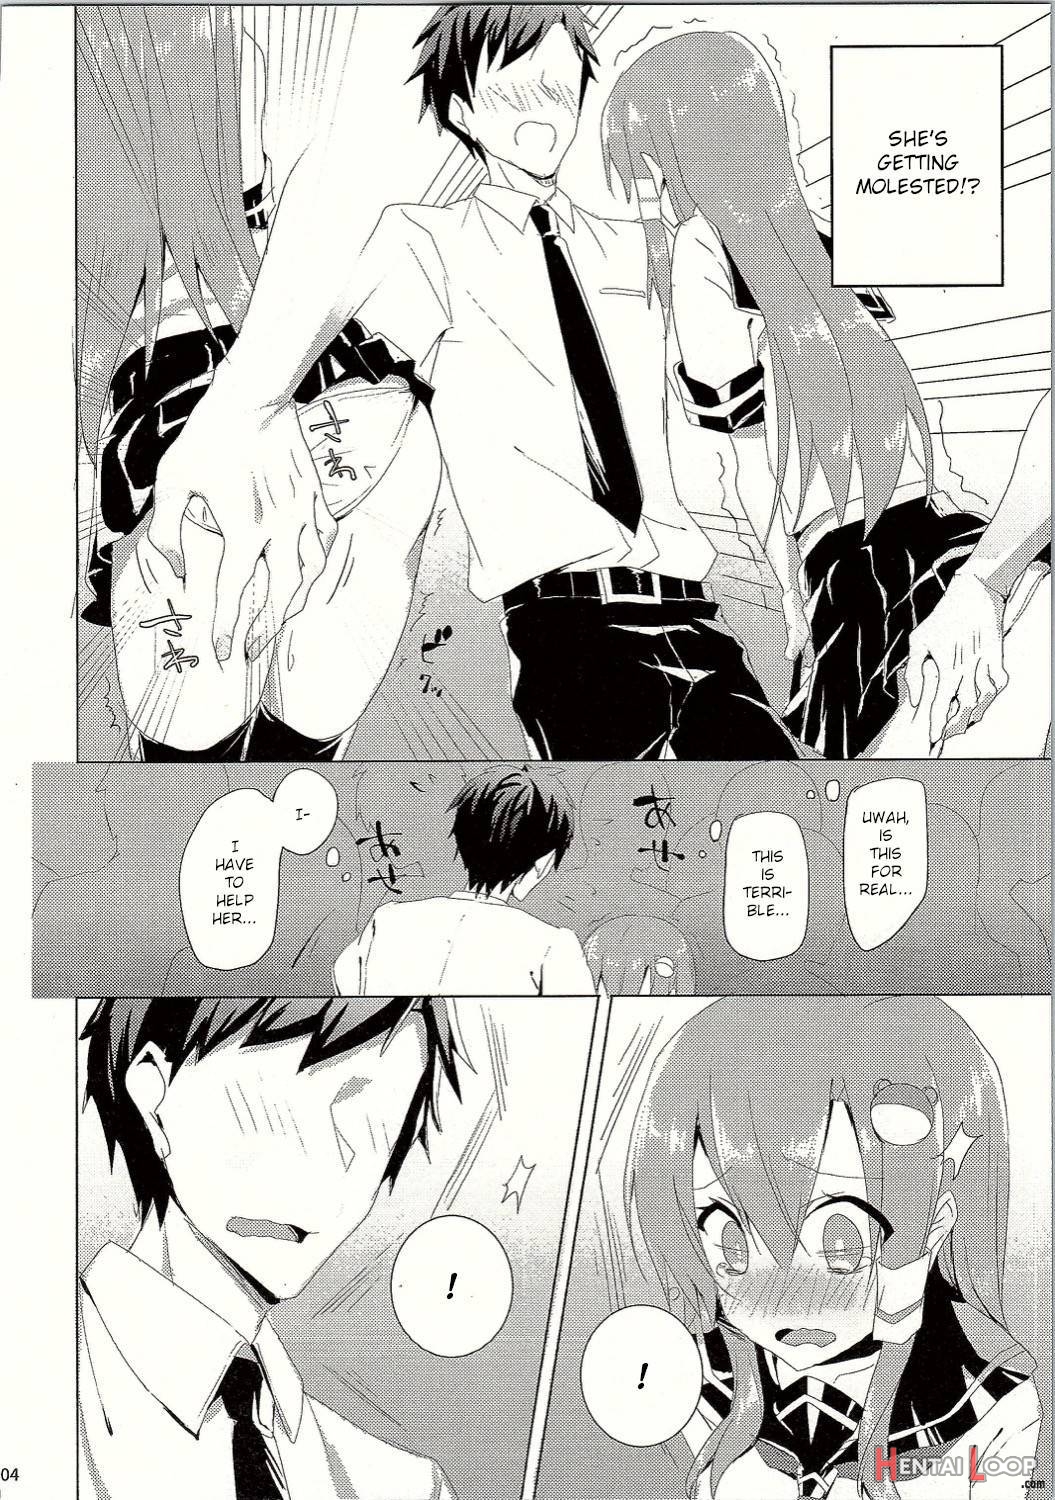 Sanae-san In Chikan Densha page 3